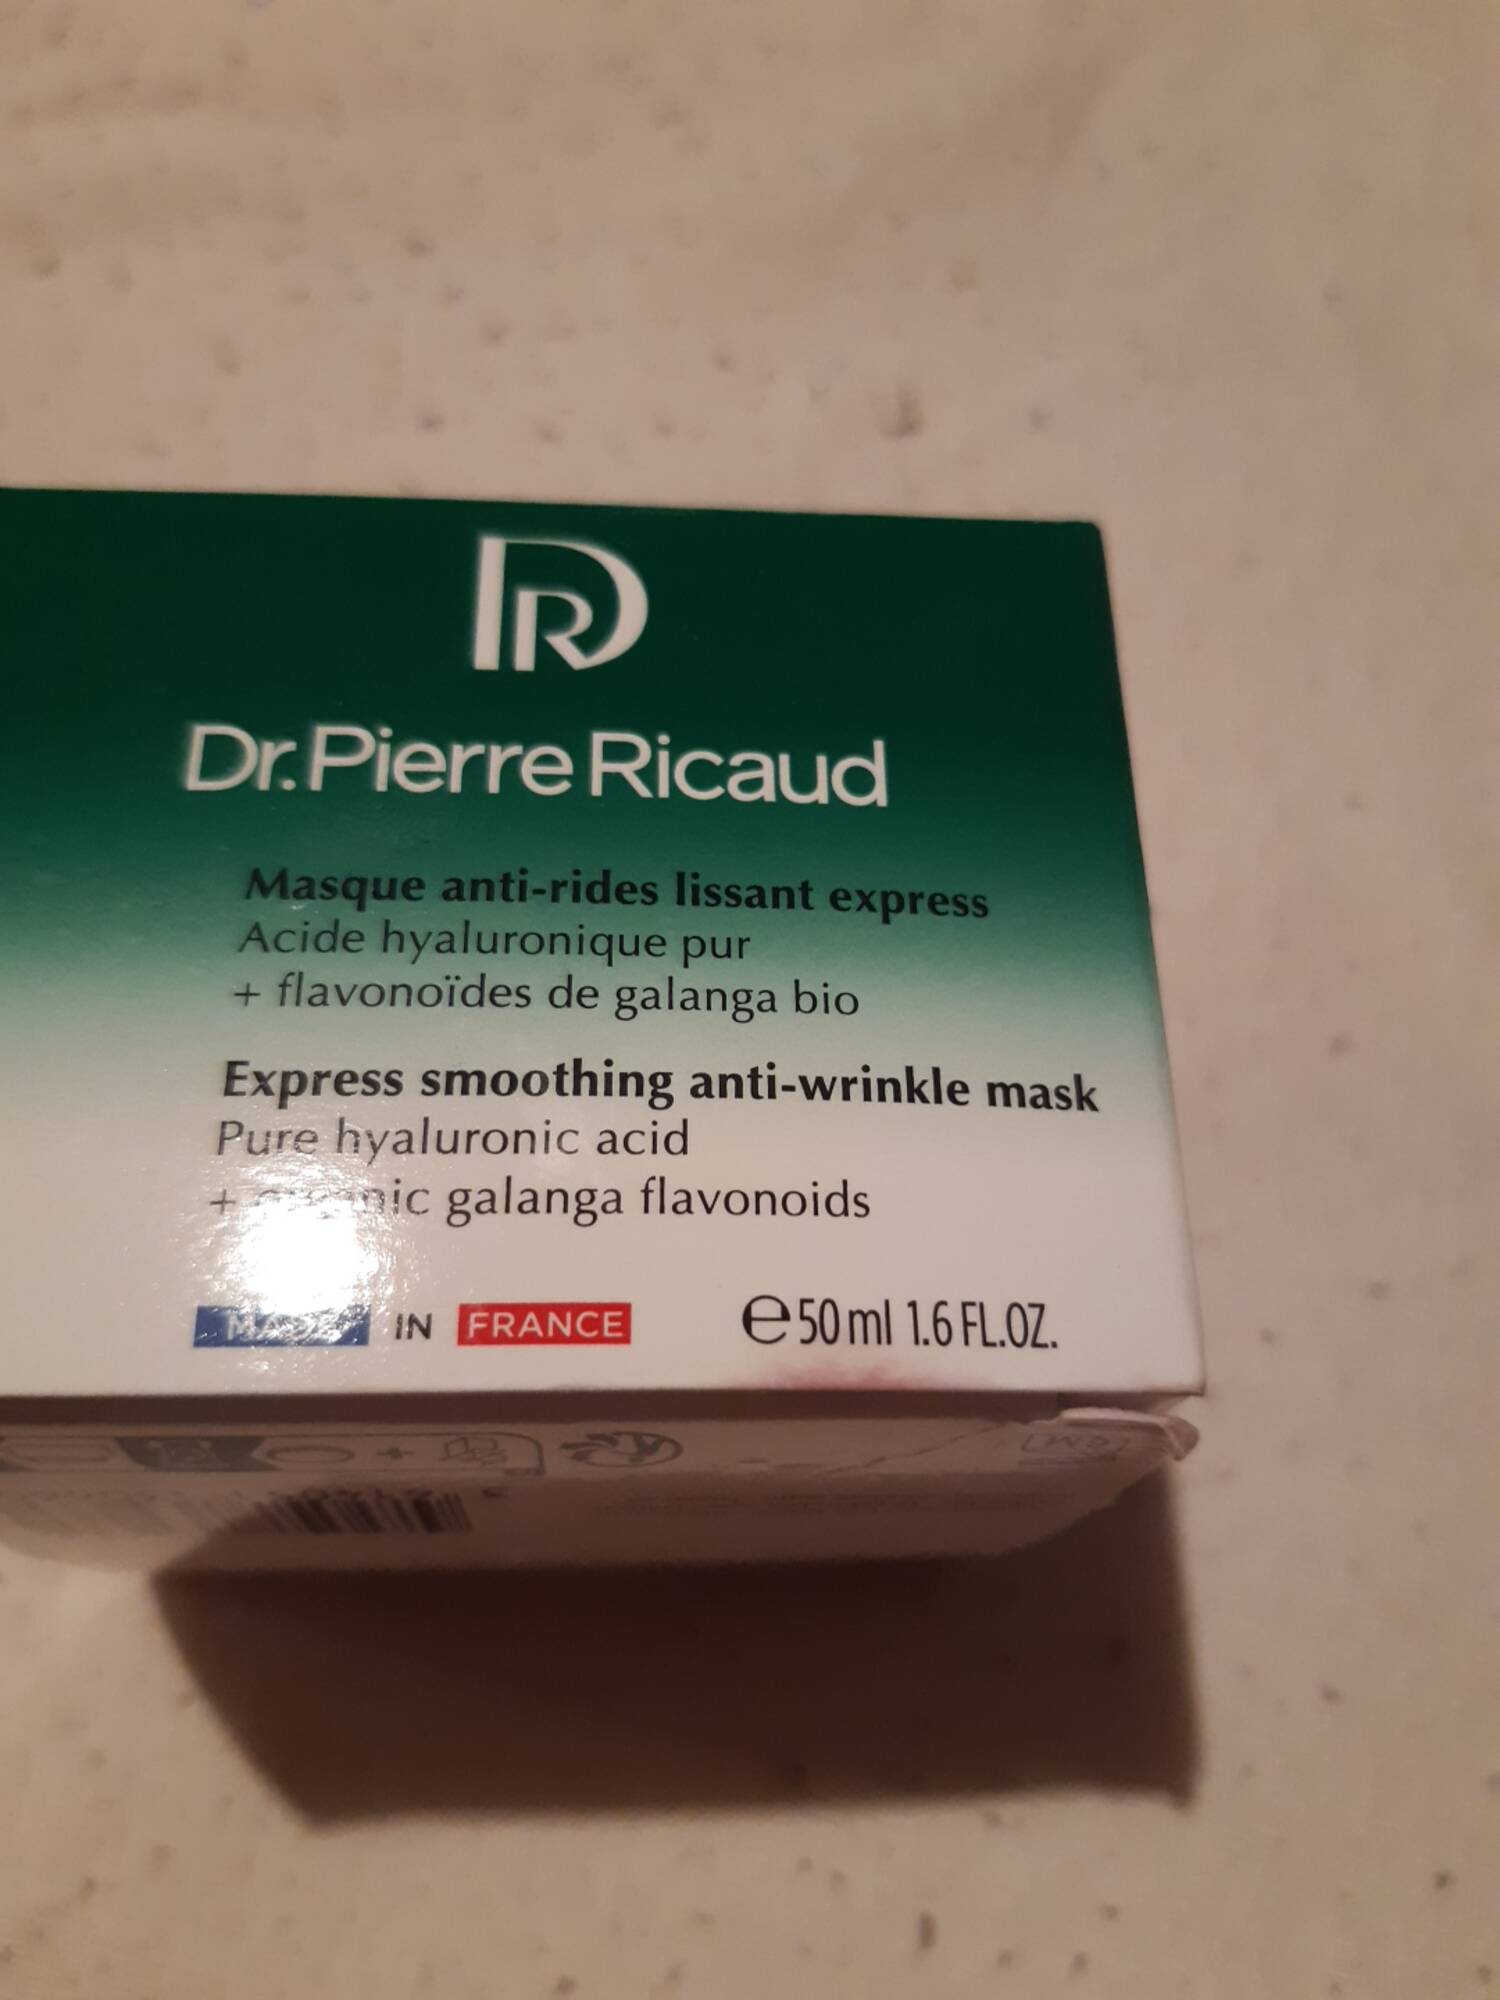 DR PIERRE RICAUD - Masque anti-rides lissant express